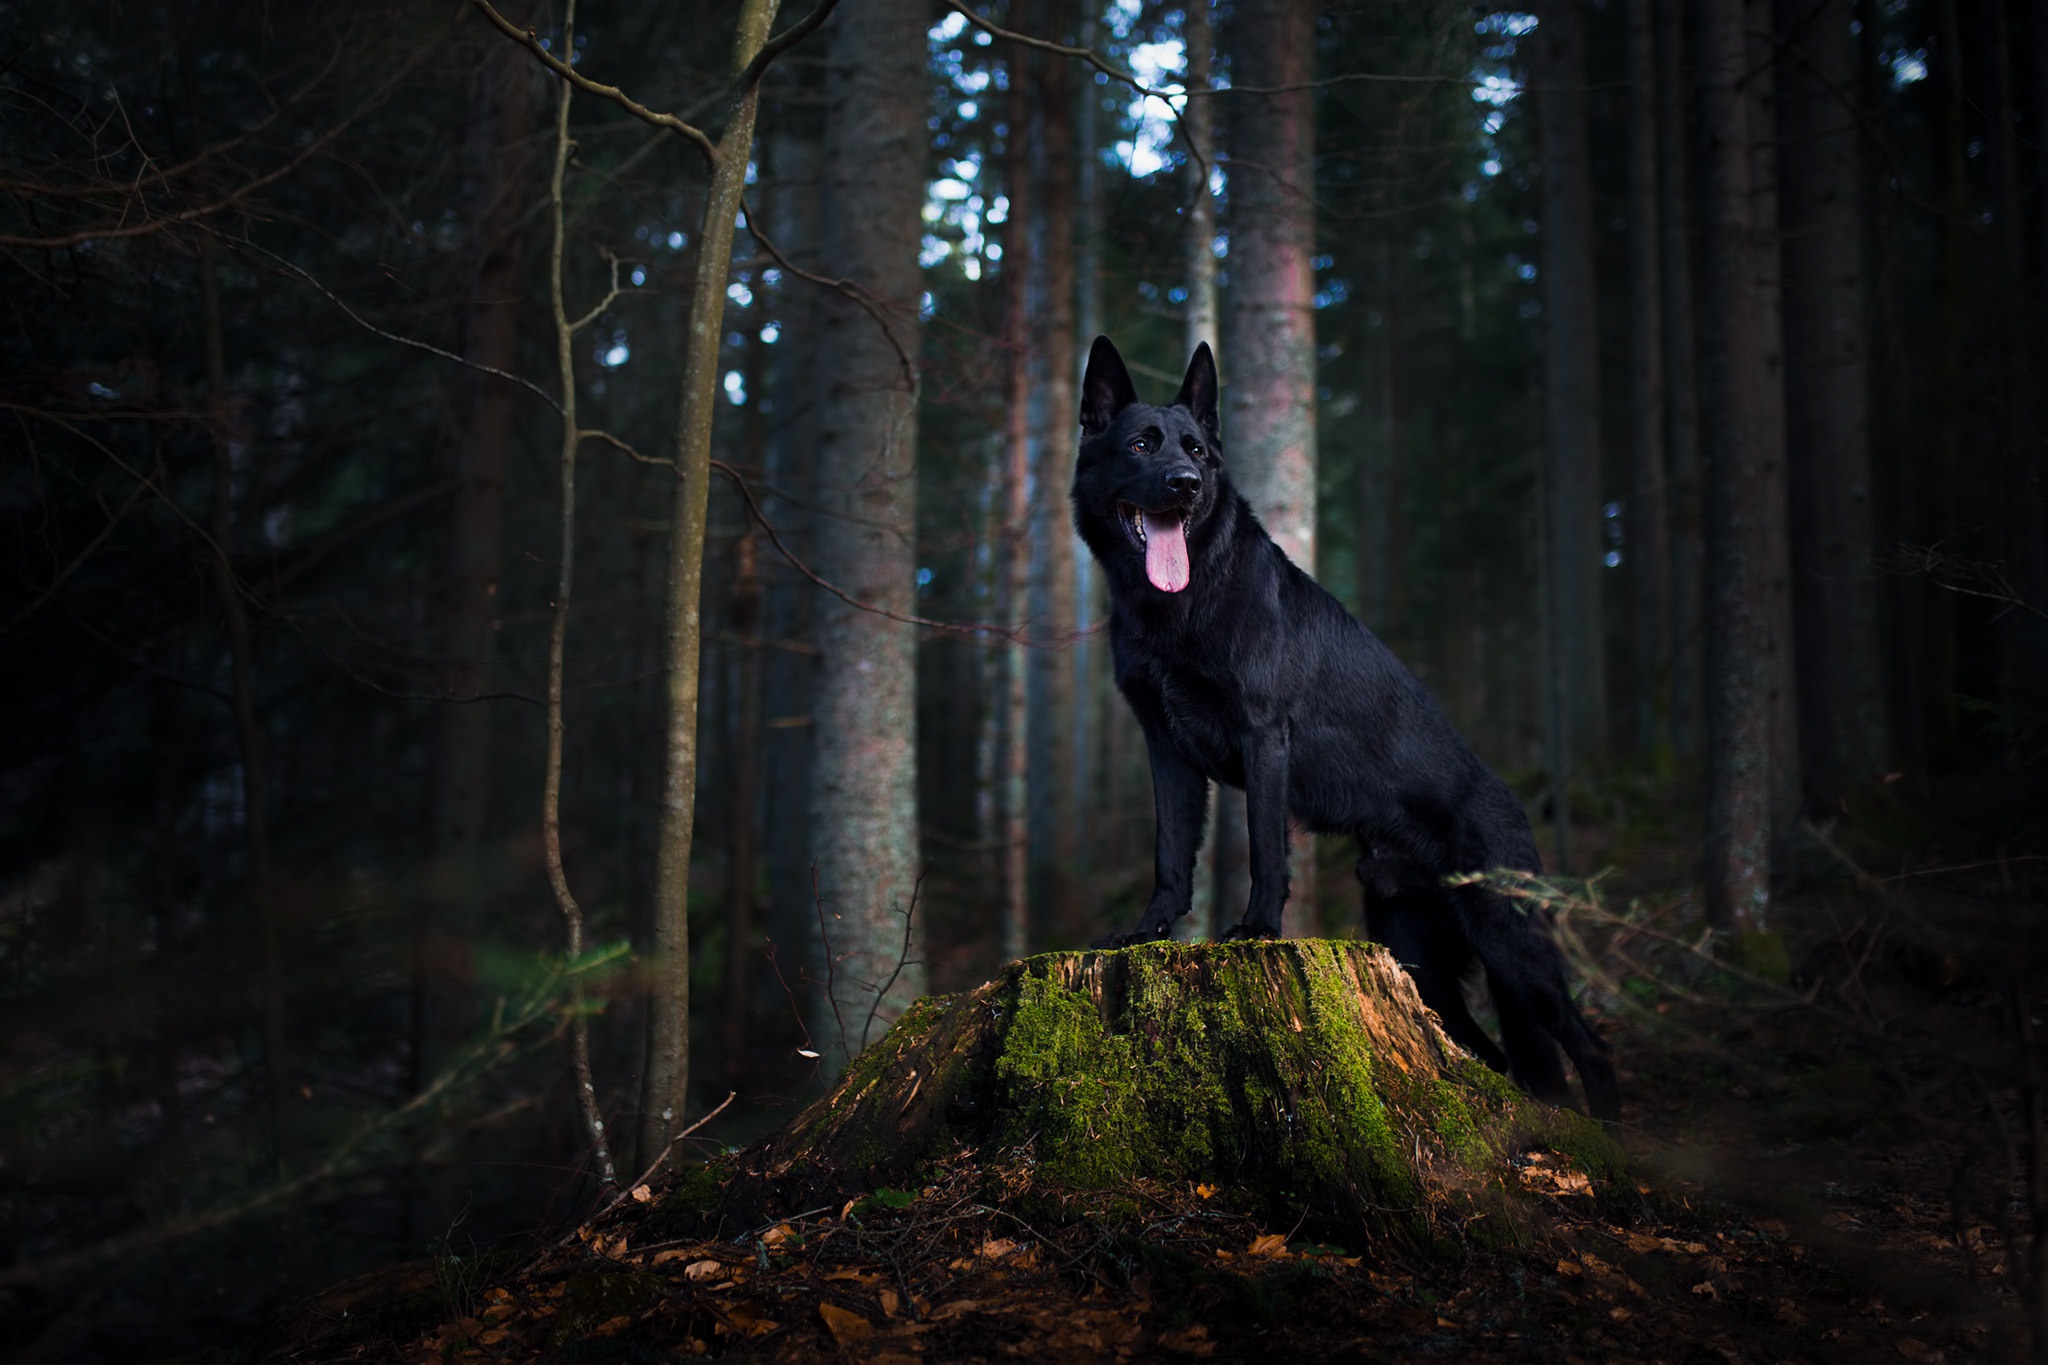 Dog German Shepherd Pet 2048x1365